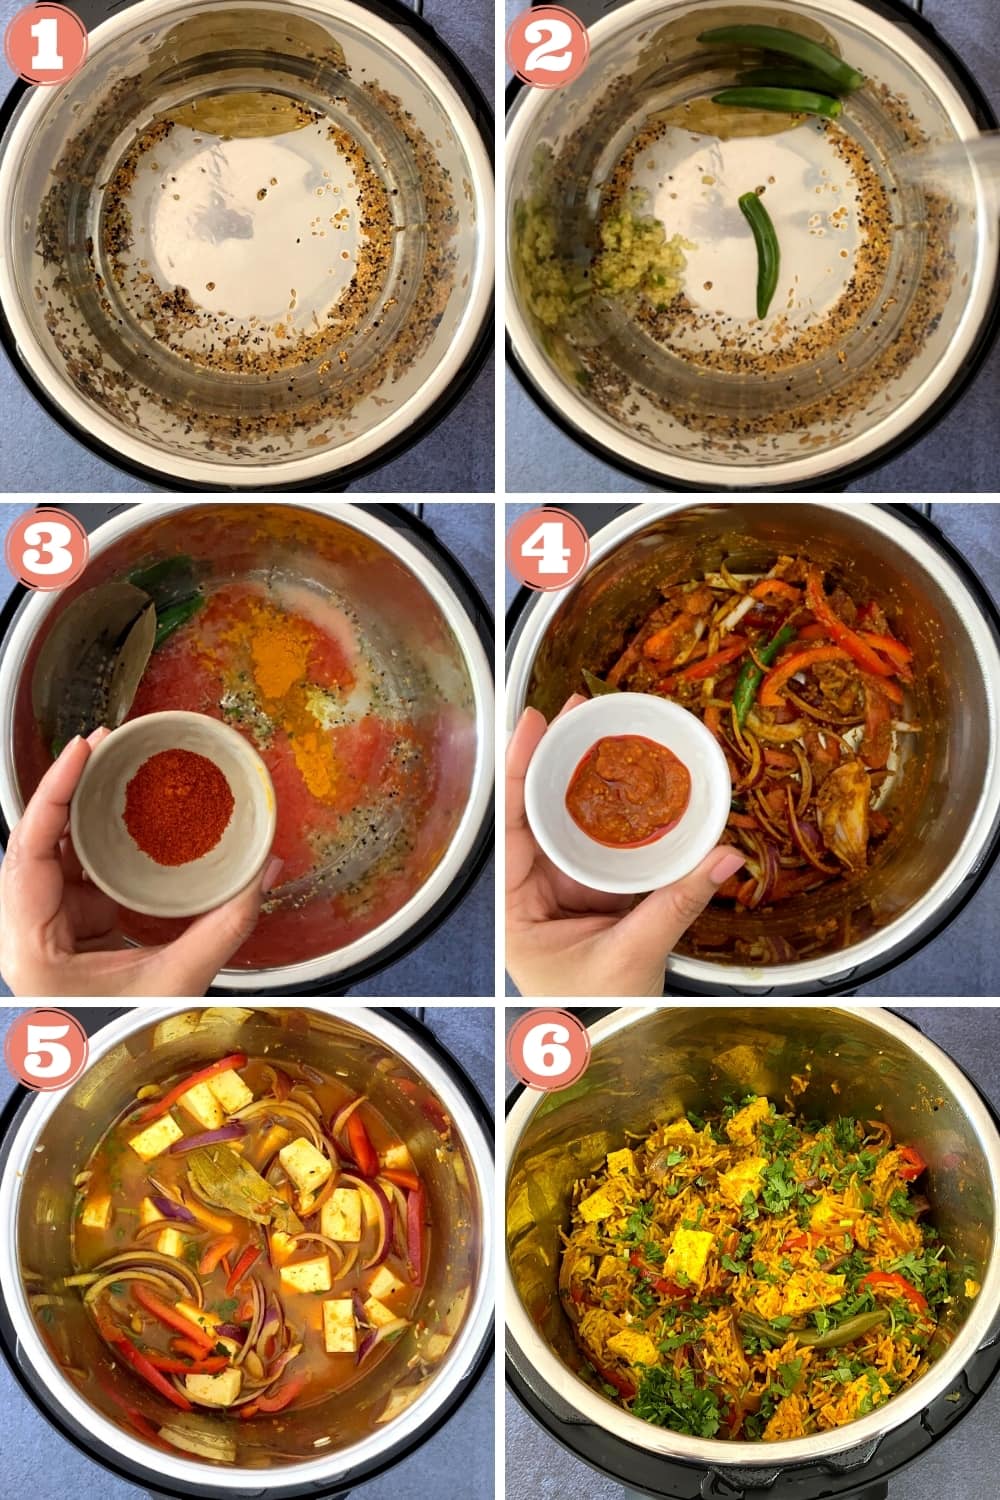 6-photo grid showing steps to make paneer biryani in instant pot